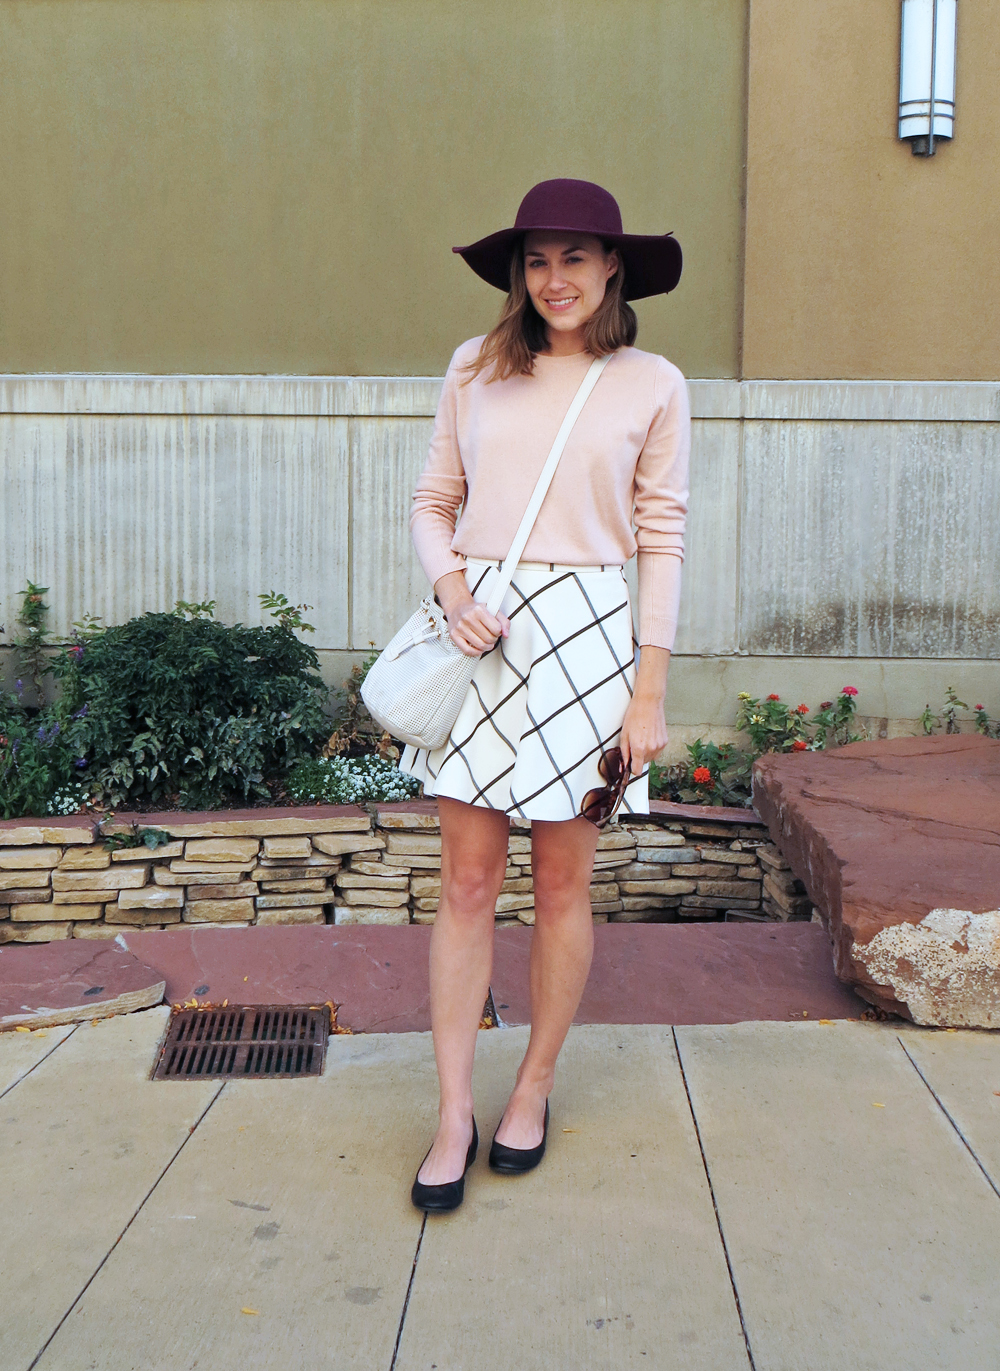 Two bloggers, one garment: Windowpane skirt